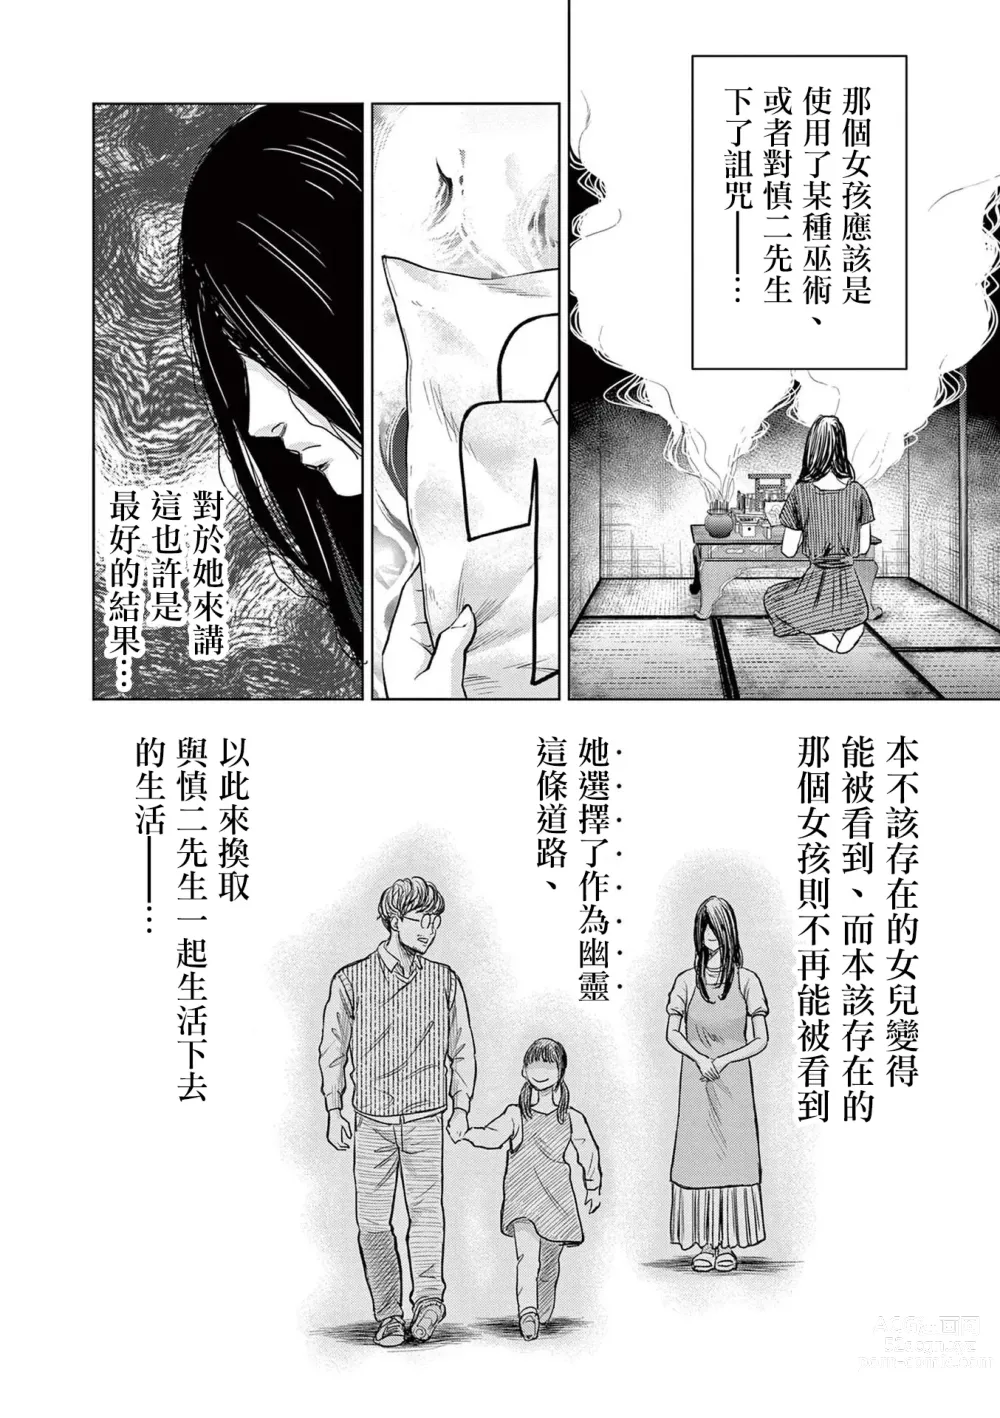 Page 43 of manga Iyadan Yobanashi Chinese]